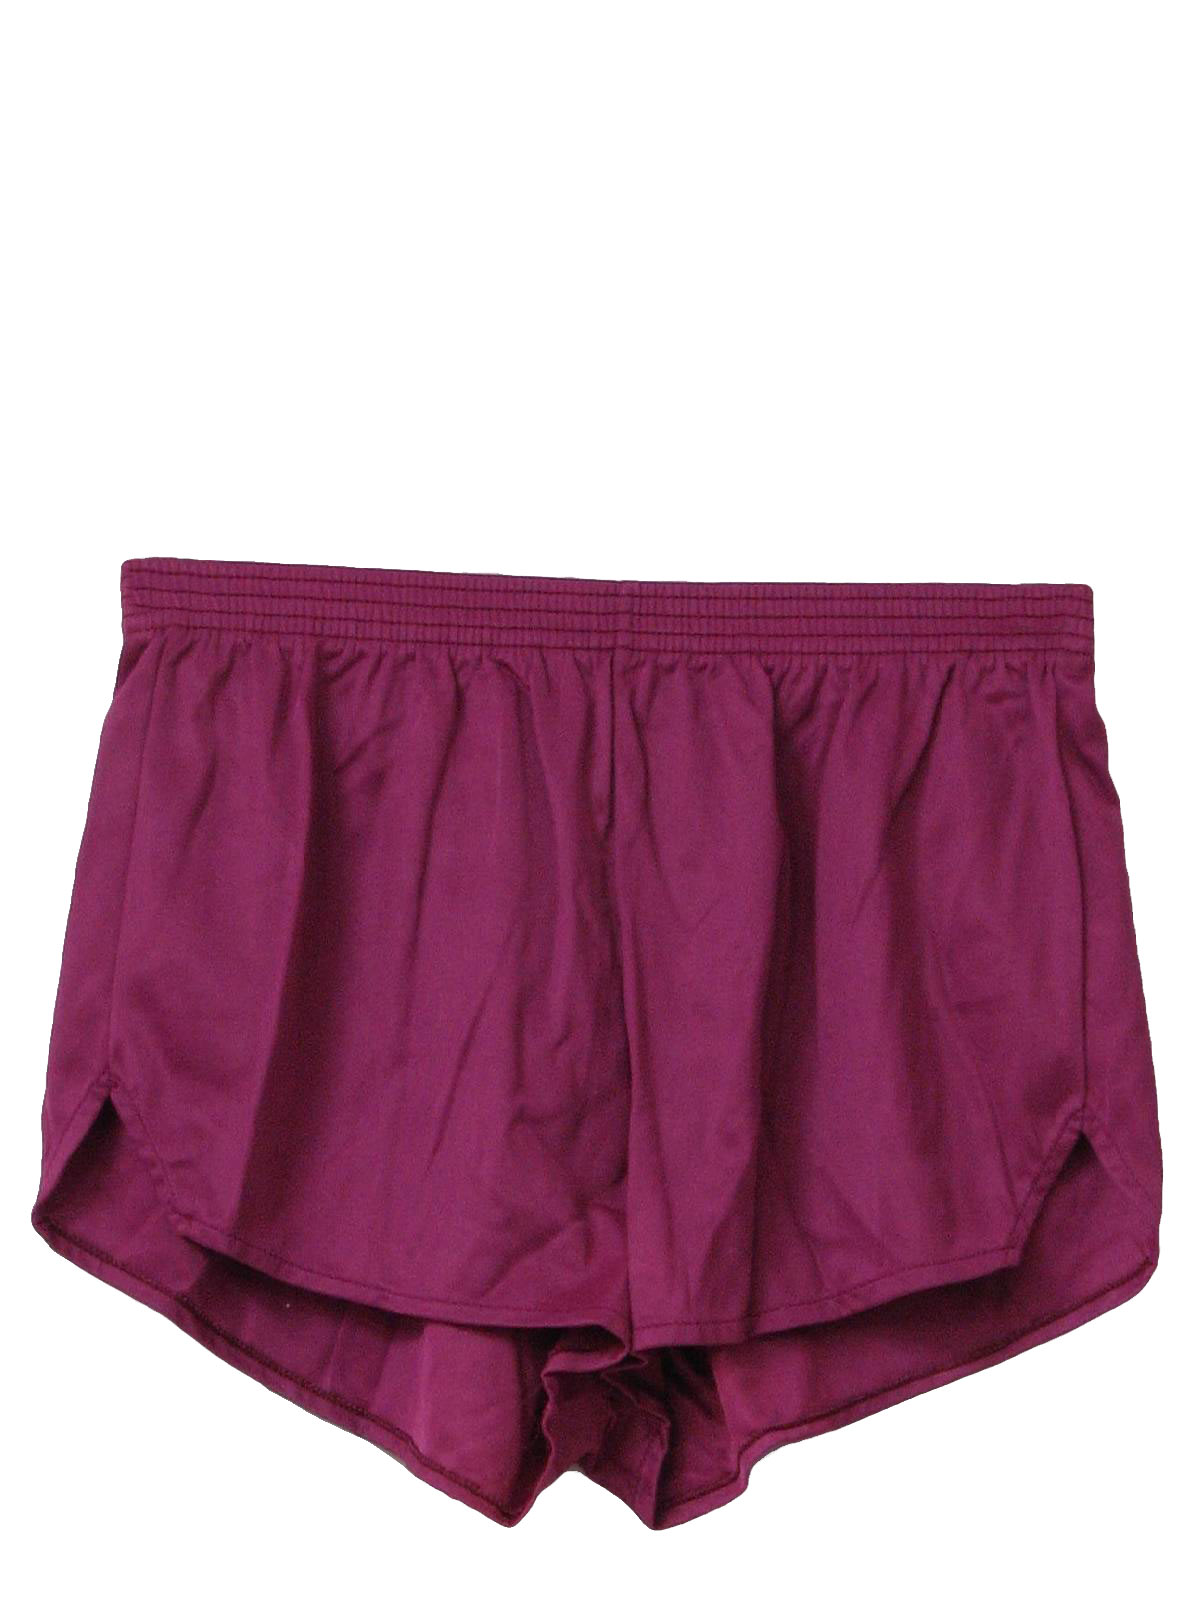 Retro 80's Shorts: 80s -Dolfin- Mens violet background nylon totally ...